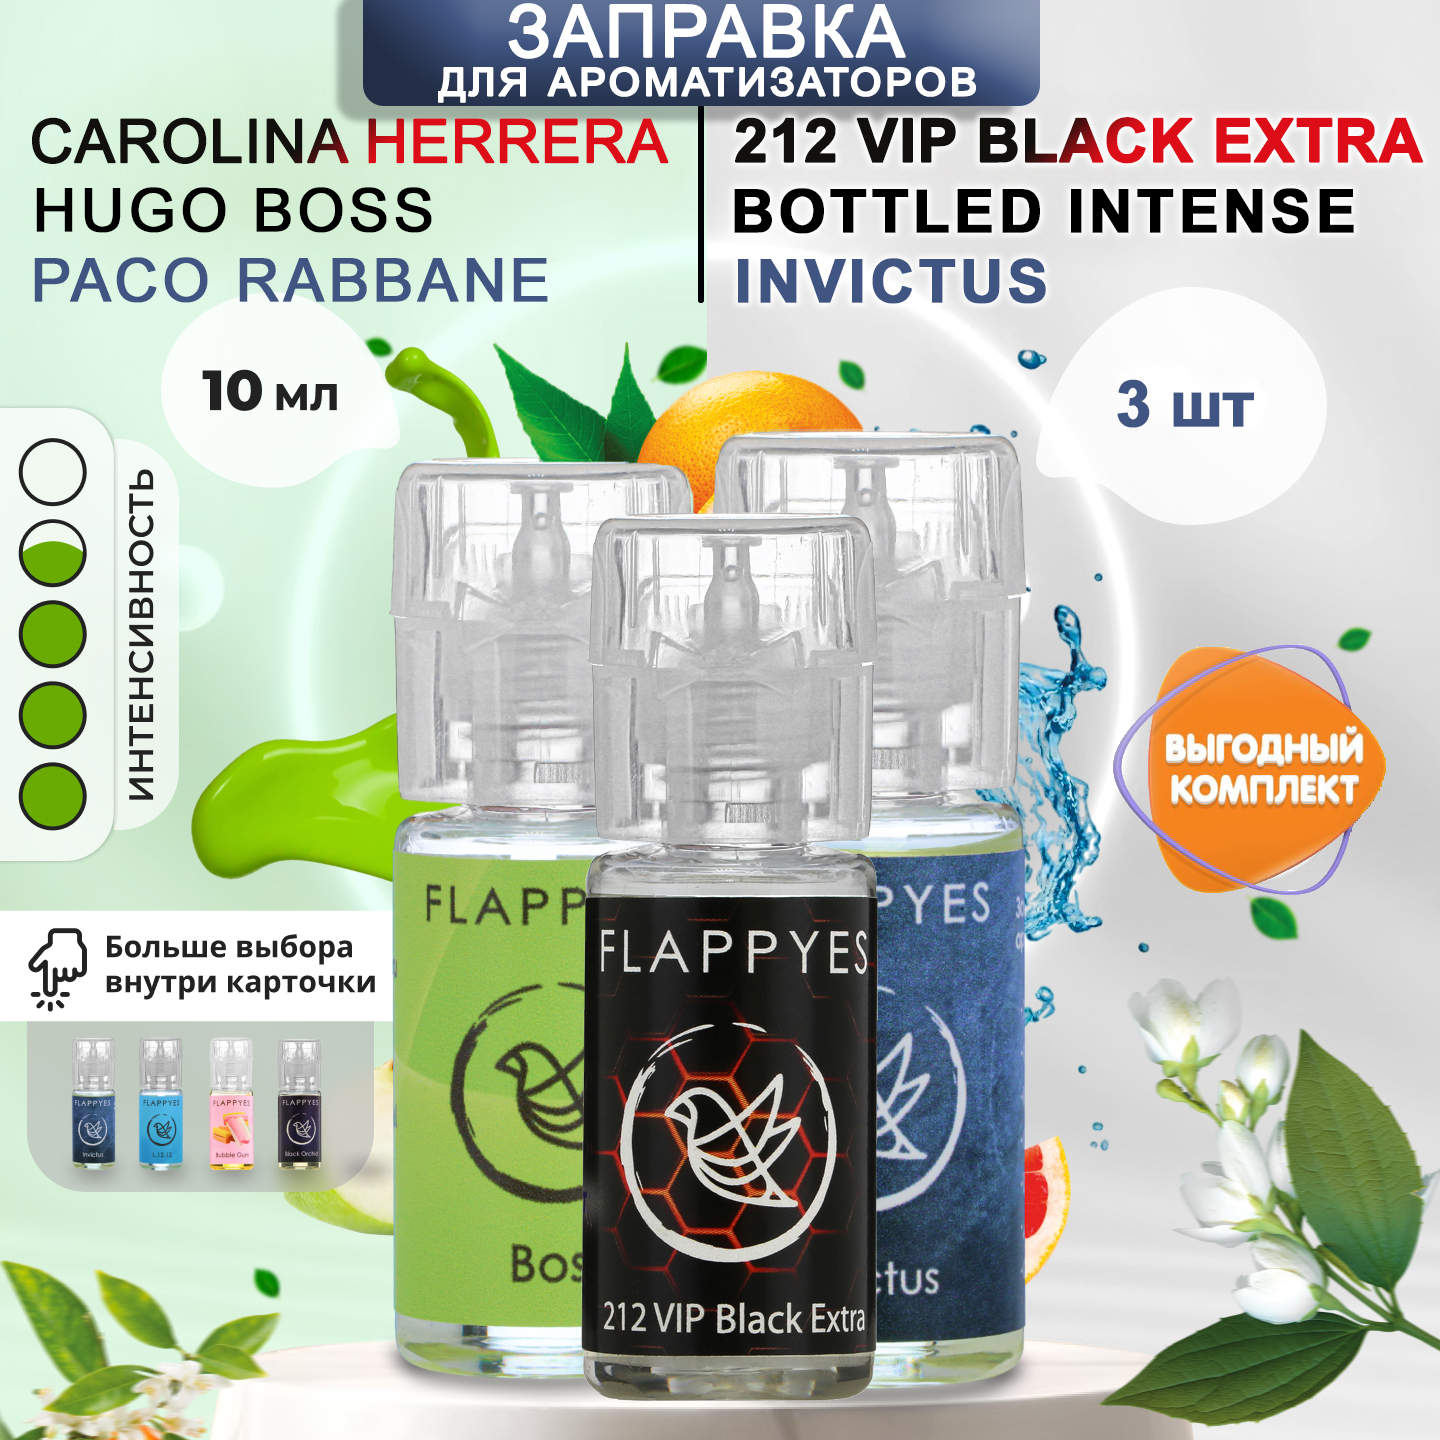 Заправка для ароматизаторов авто и дома Flappyes - Rabbane Invictus+Boss+212 VIP Black